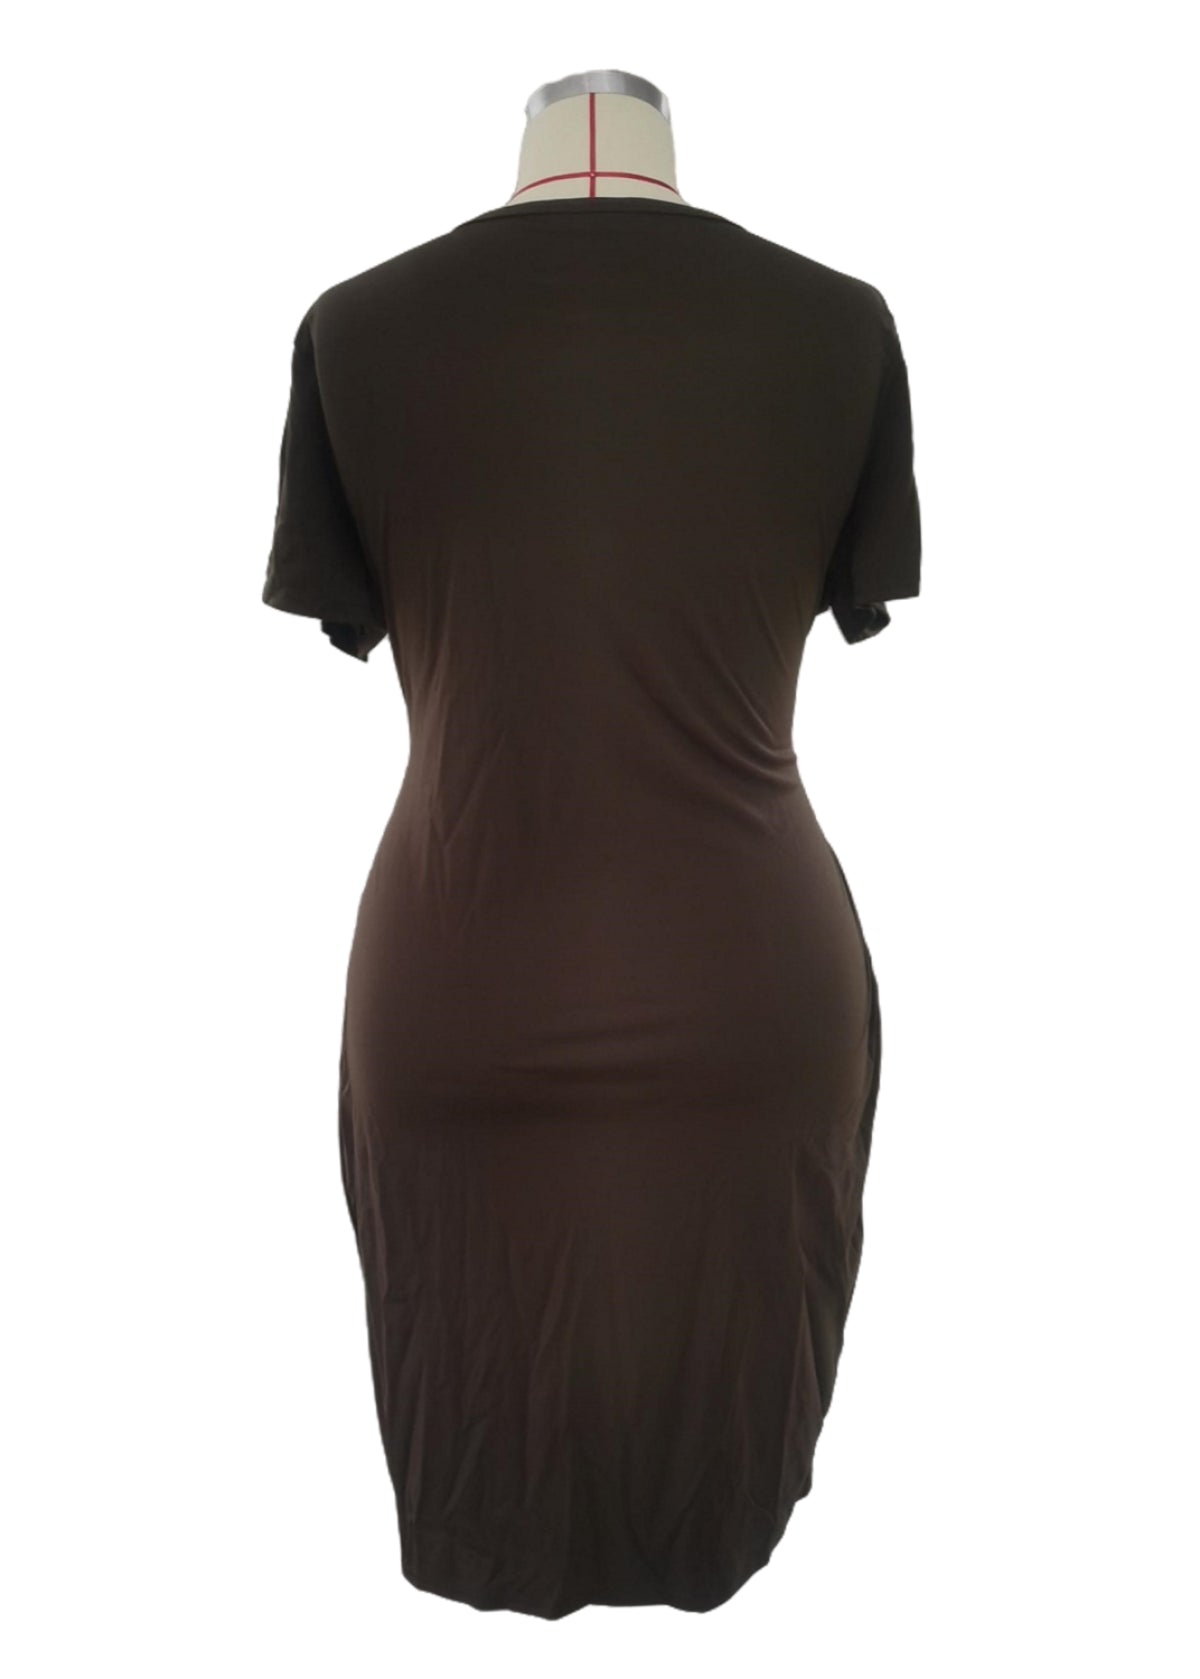 Plus Size Women's Short-Sleeved Asymmetrical Dress